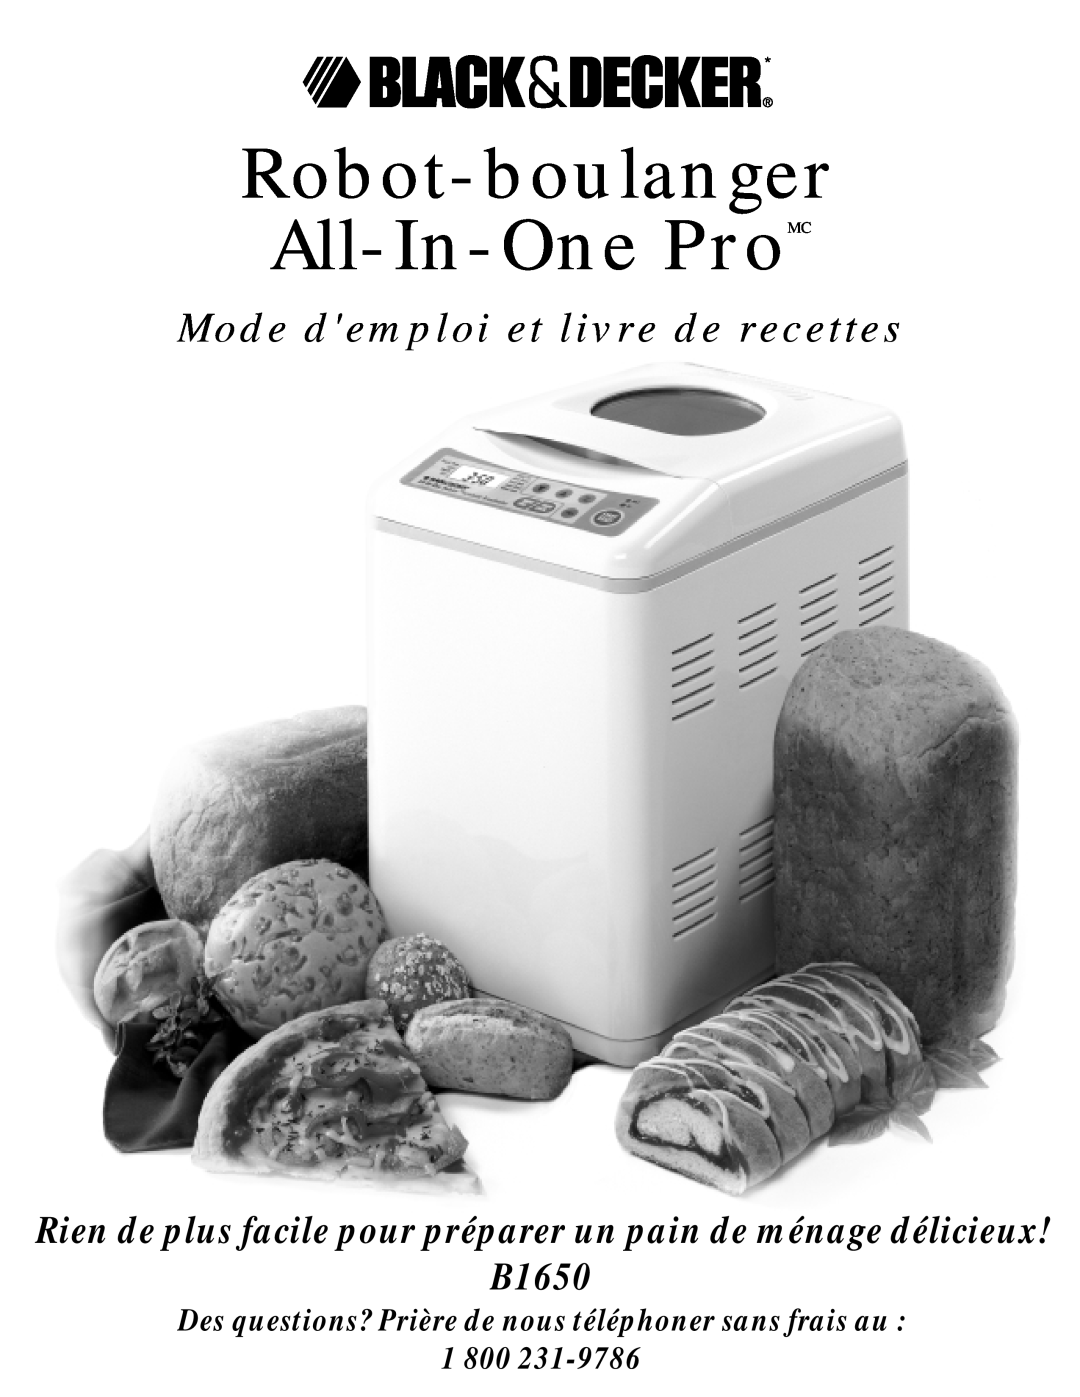 Black & Decker B1650 manual Robot-boulanger All-In-OneProMC, Mode demploi et livre de recettes, 1 800 